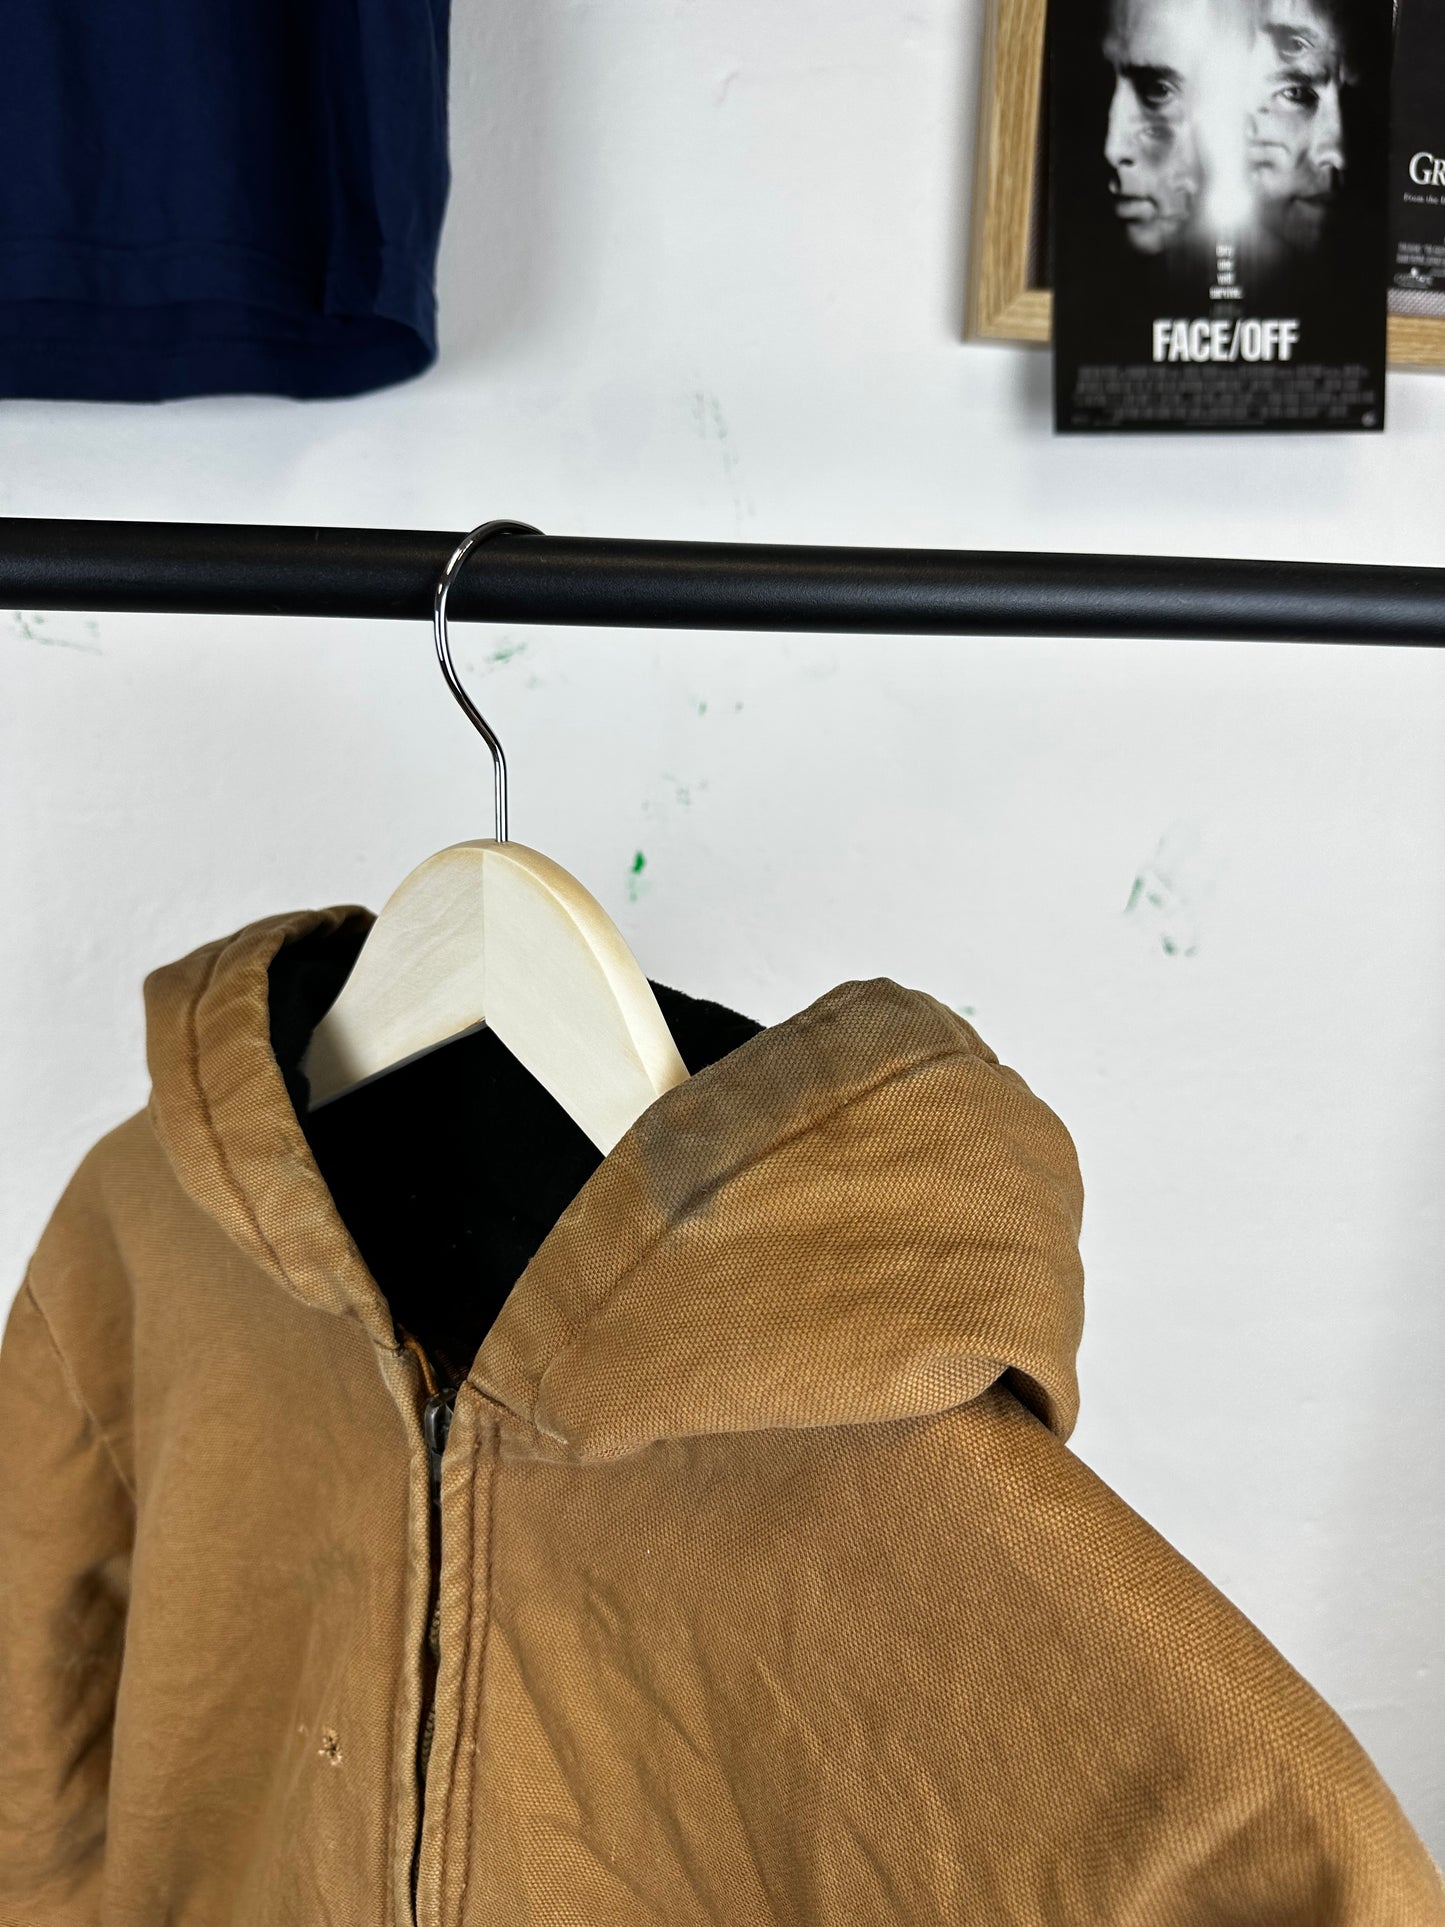 Vintage Five bros  jacket - size M